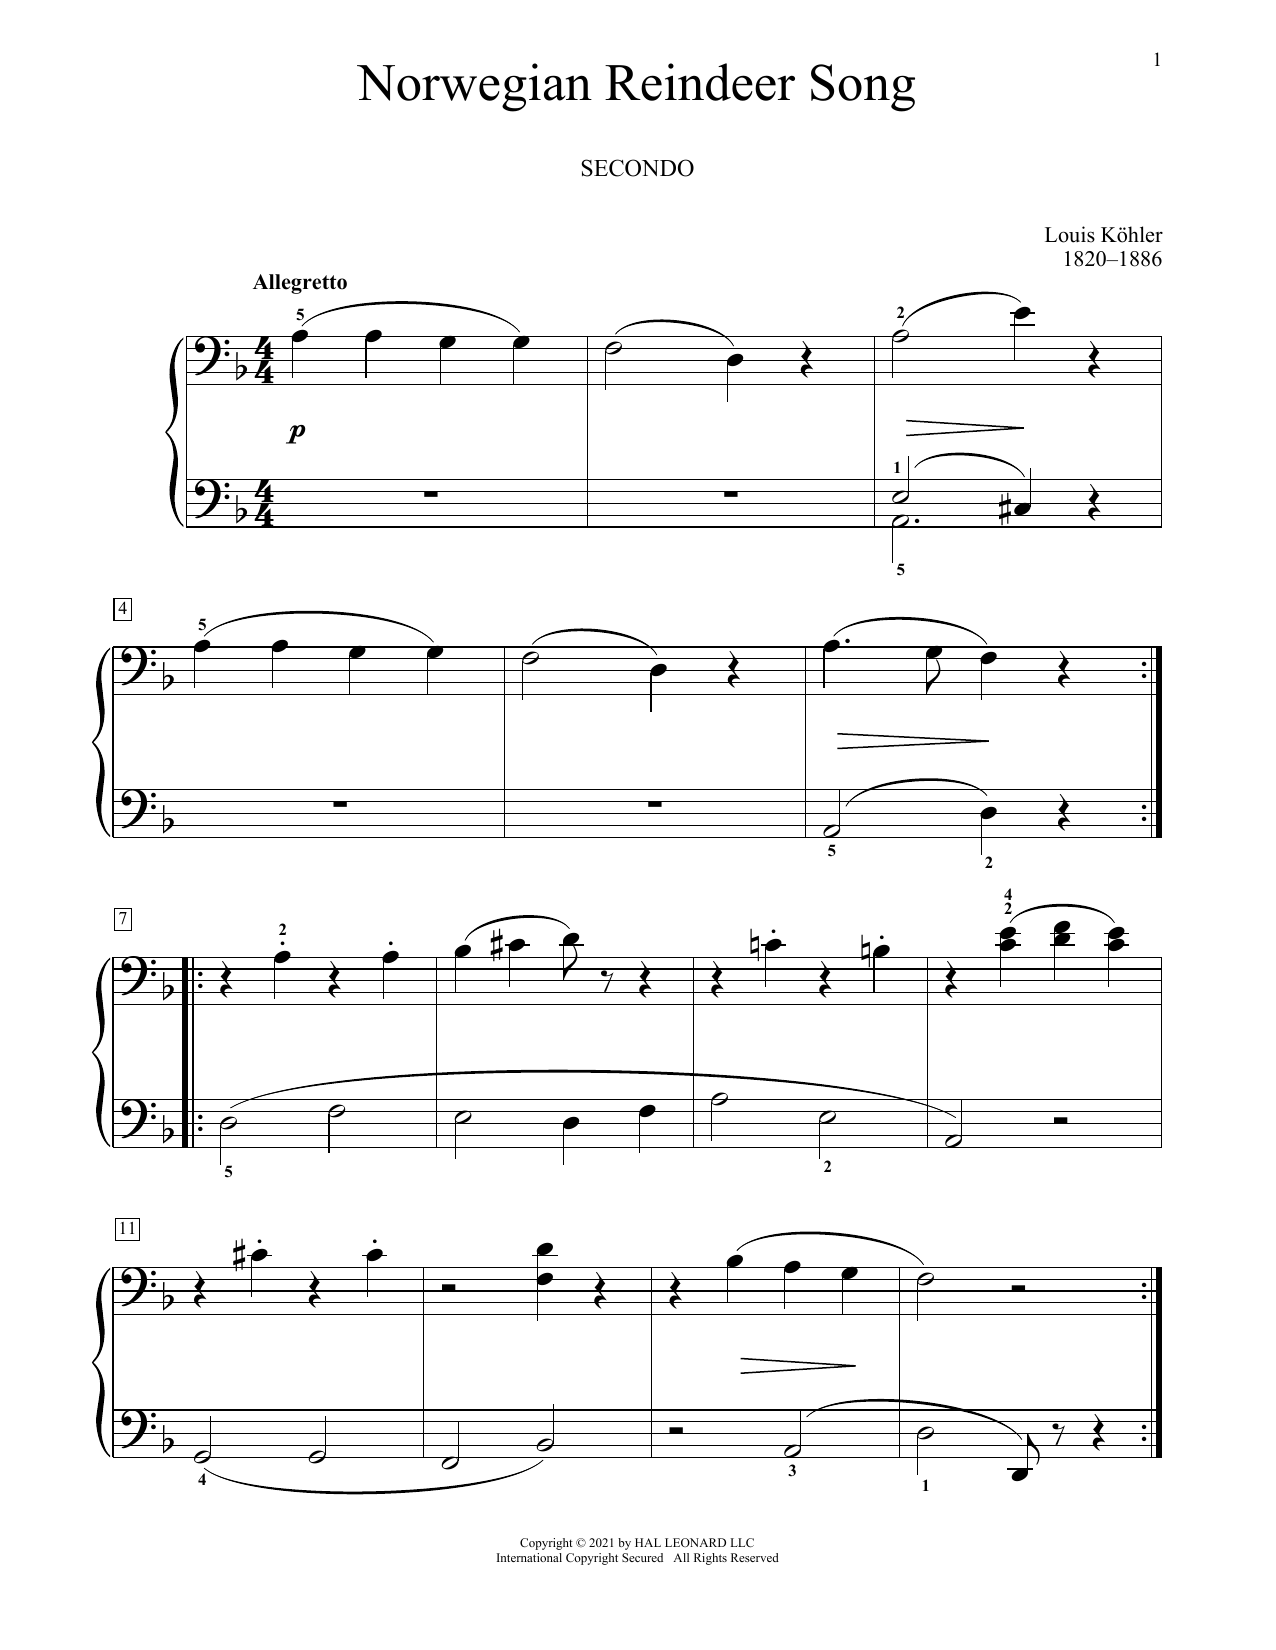 Louis Kohler Norwegian Reindeer Song Sheet Music Notes & Chords for Piano Duet - Download or Print PDF